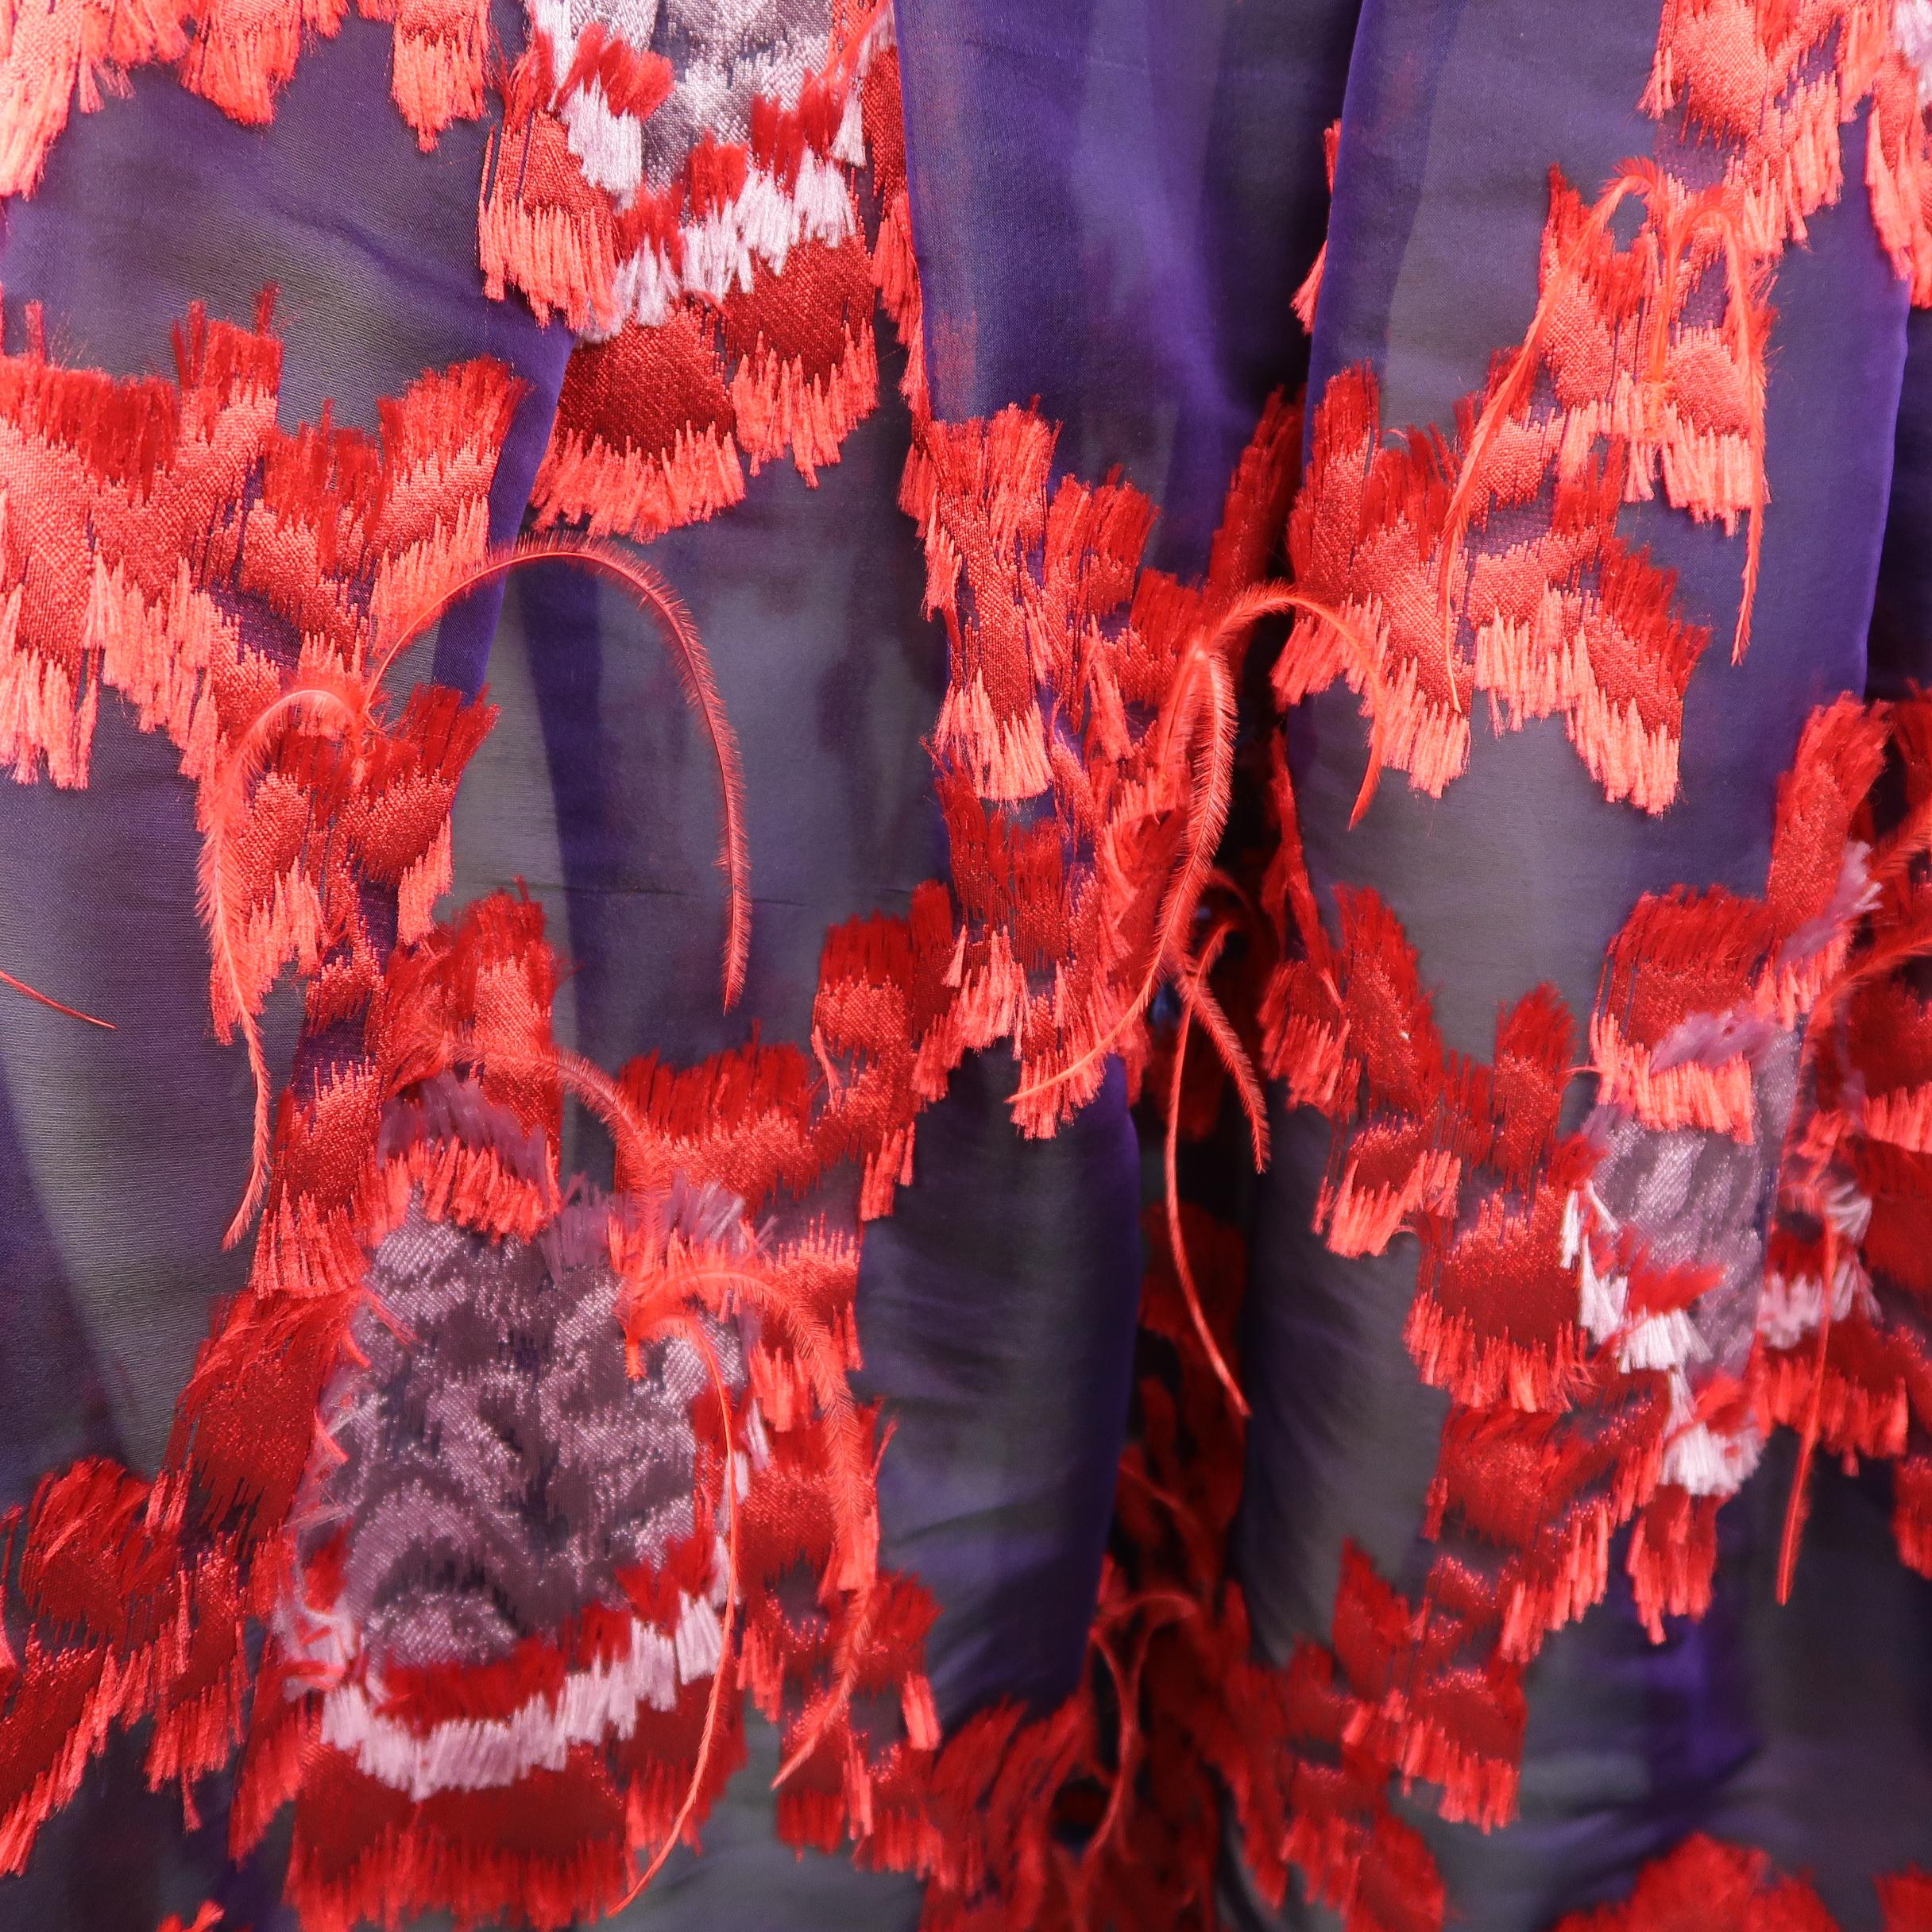 ERDEM Gown - Fall 2015 Runway - Red, Purple, Knit, Taffeta Feather Evening Dress 4